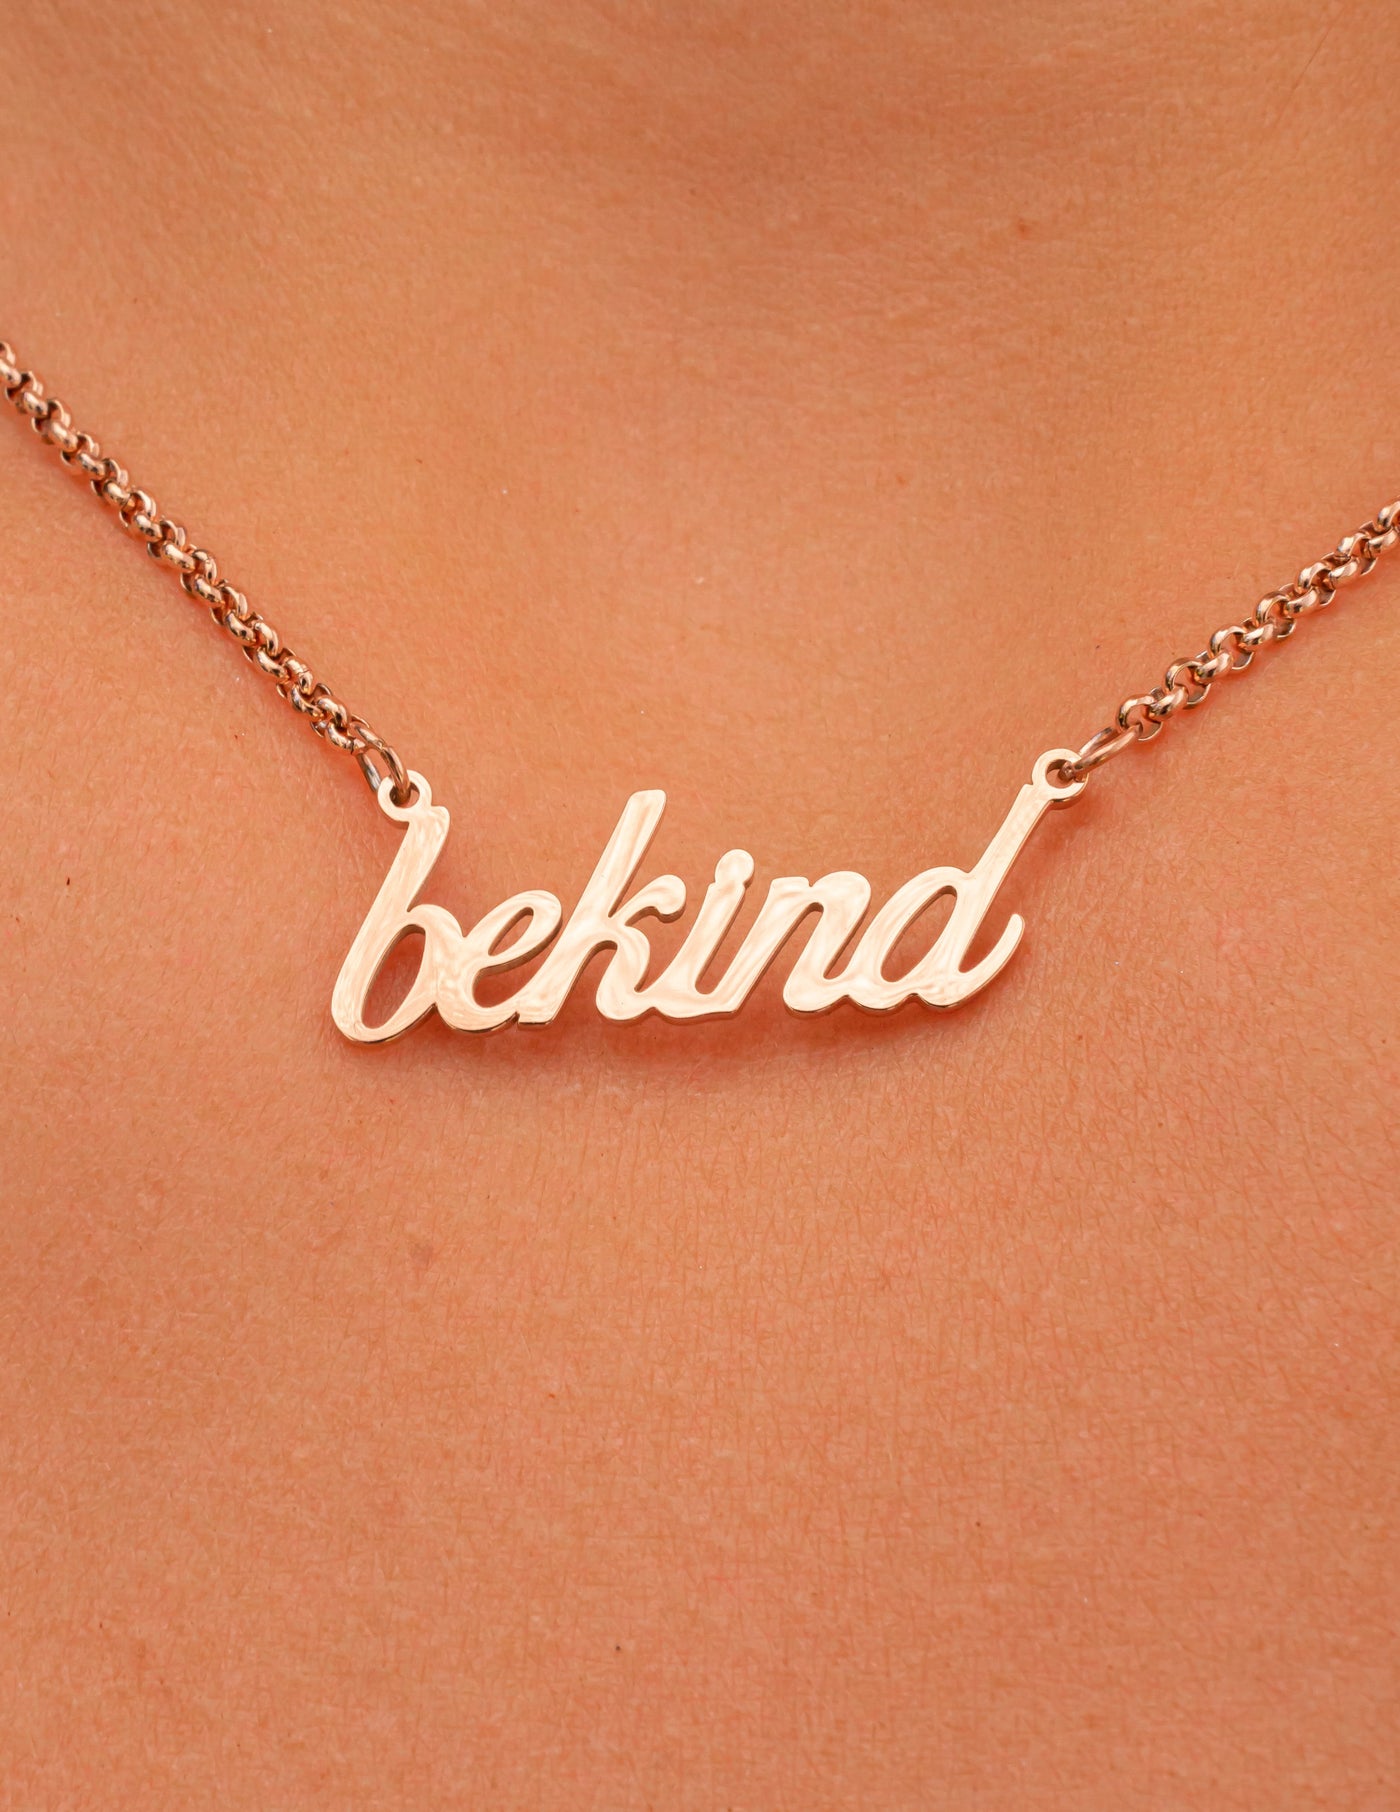 Be Kind. - 18k Rose Gold Necklace Necklace Selfawear 